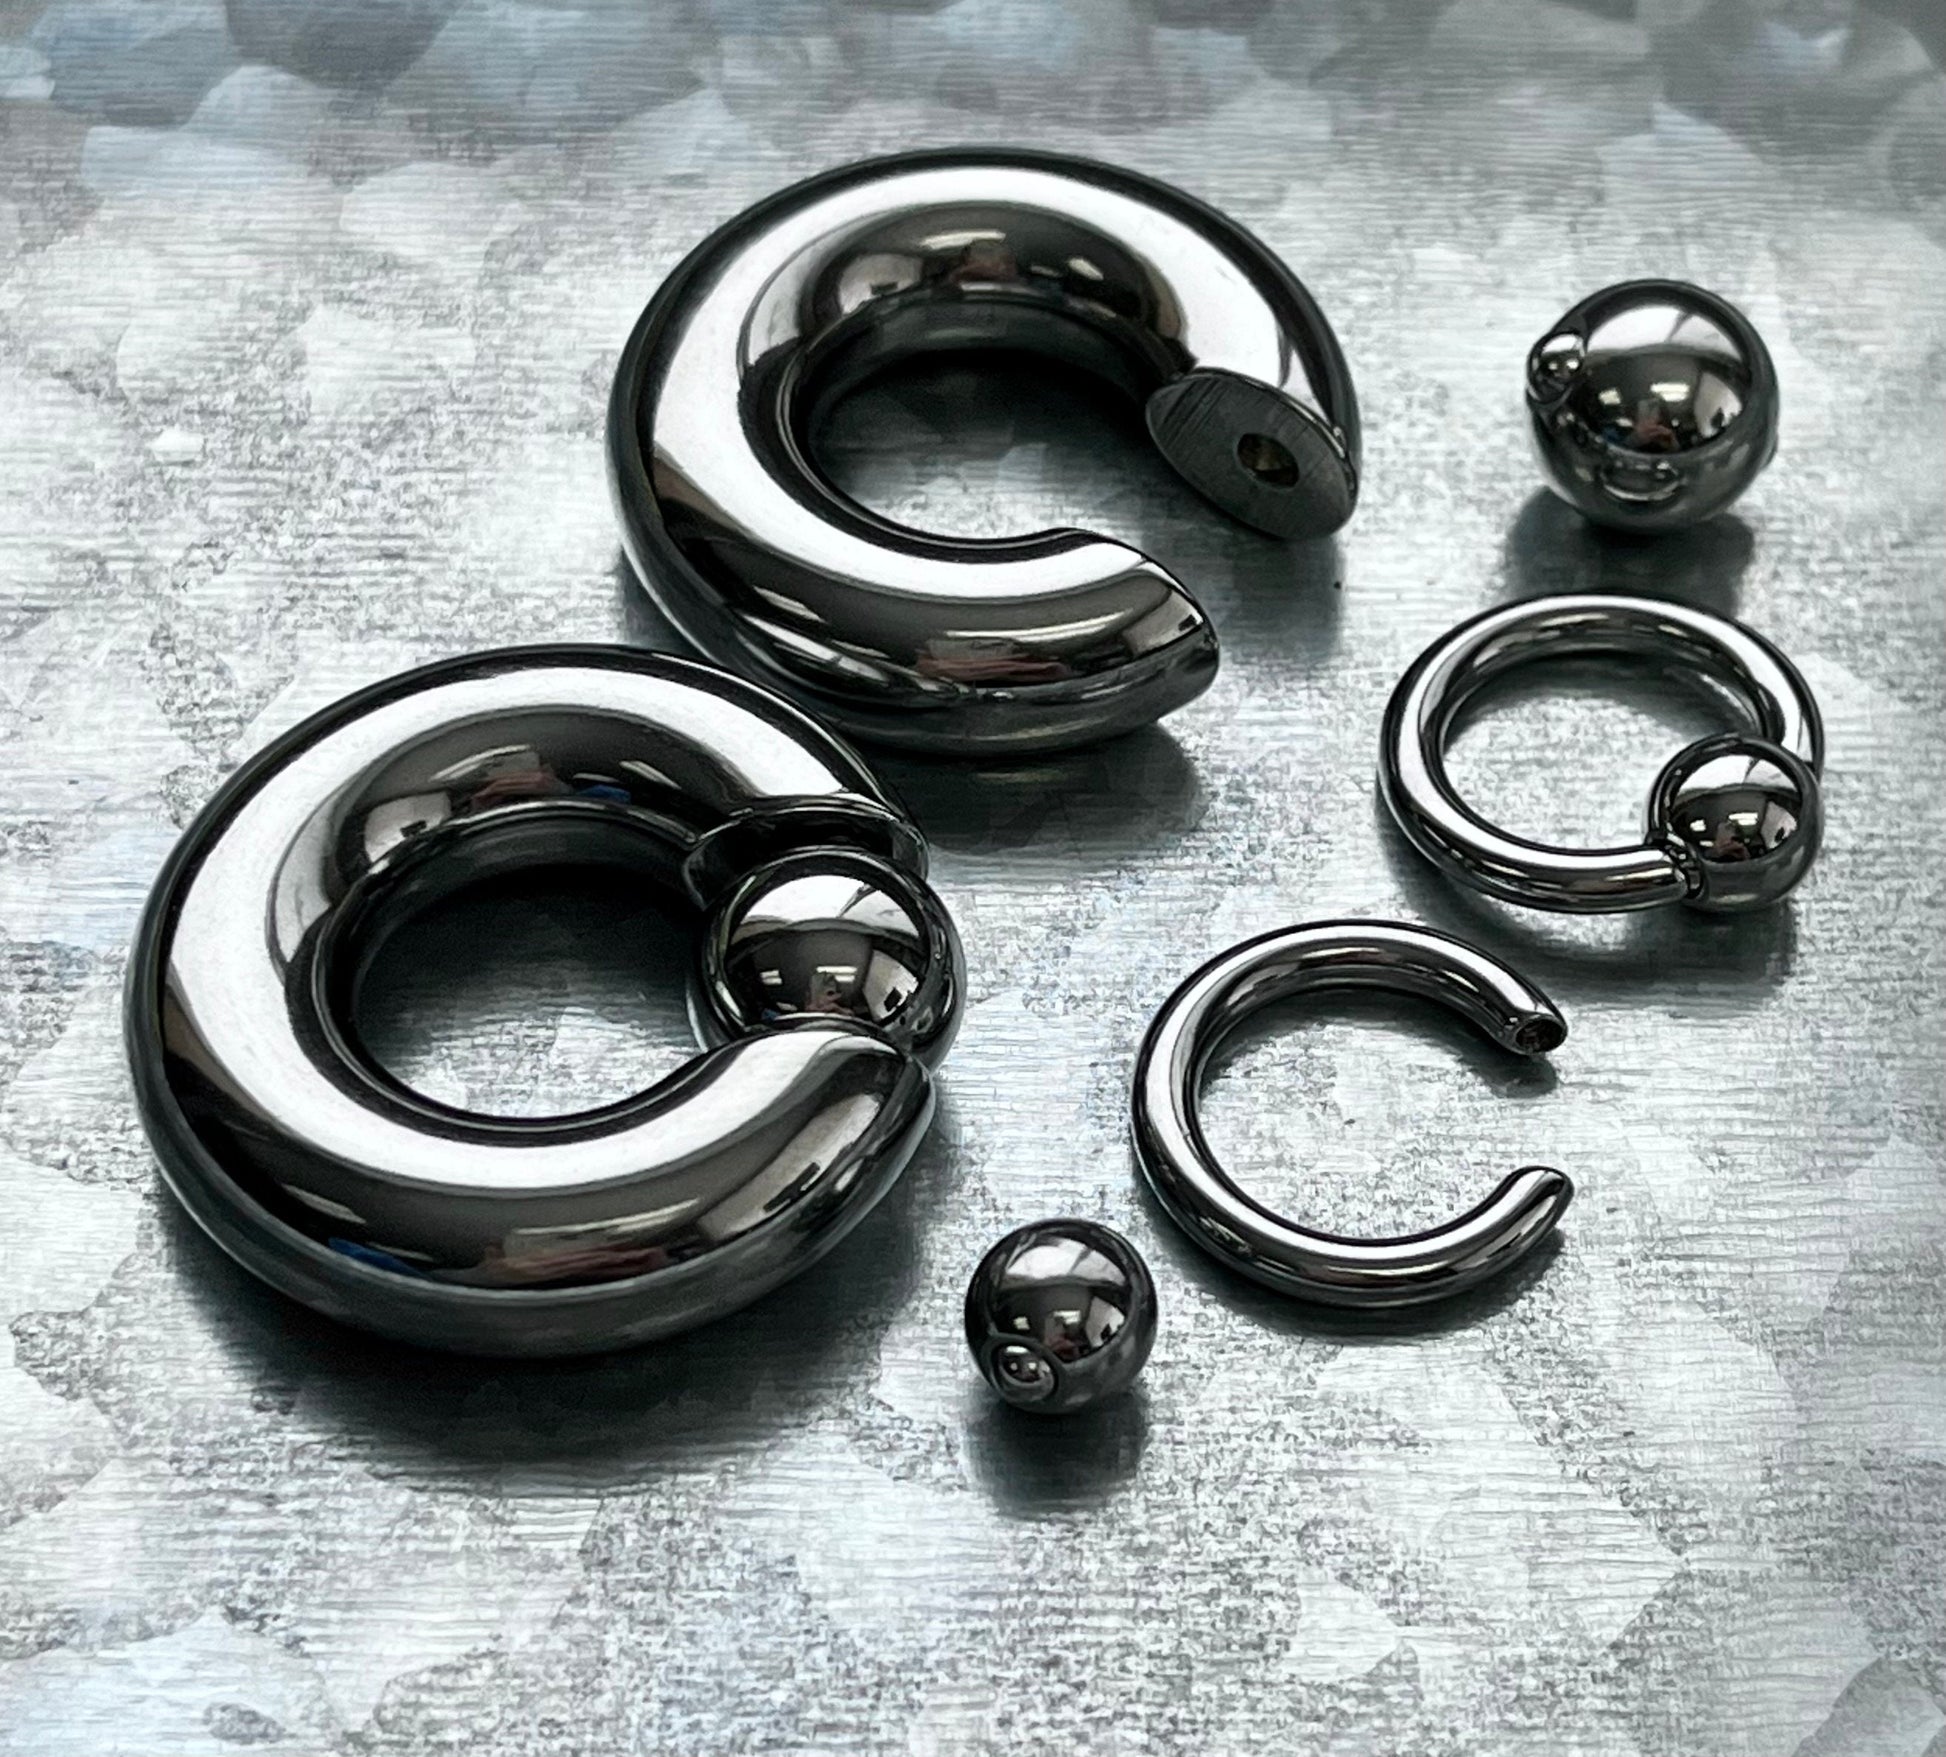 1 Piece Spring Loaded Captive Bead Large Gauge Steel Segment Ring/Hoop - Easy Pop Out - Gauges 8g (3.2mm) thru 00g (10mm) Available!